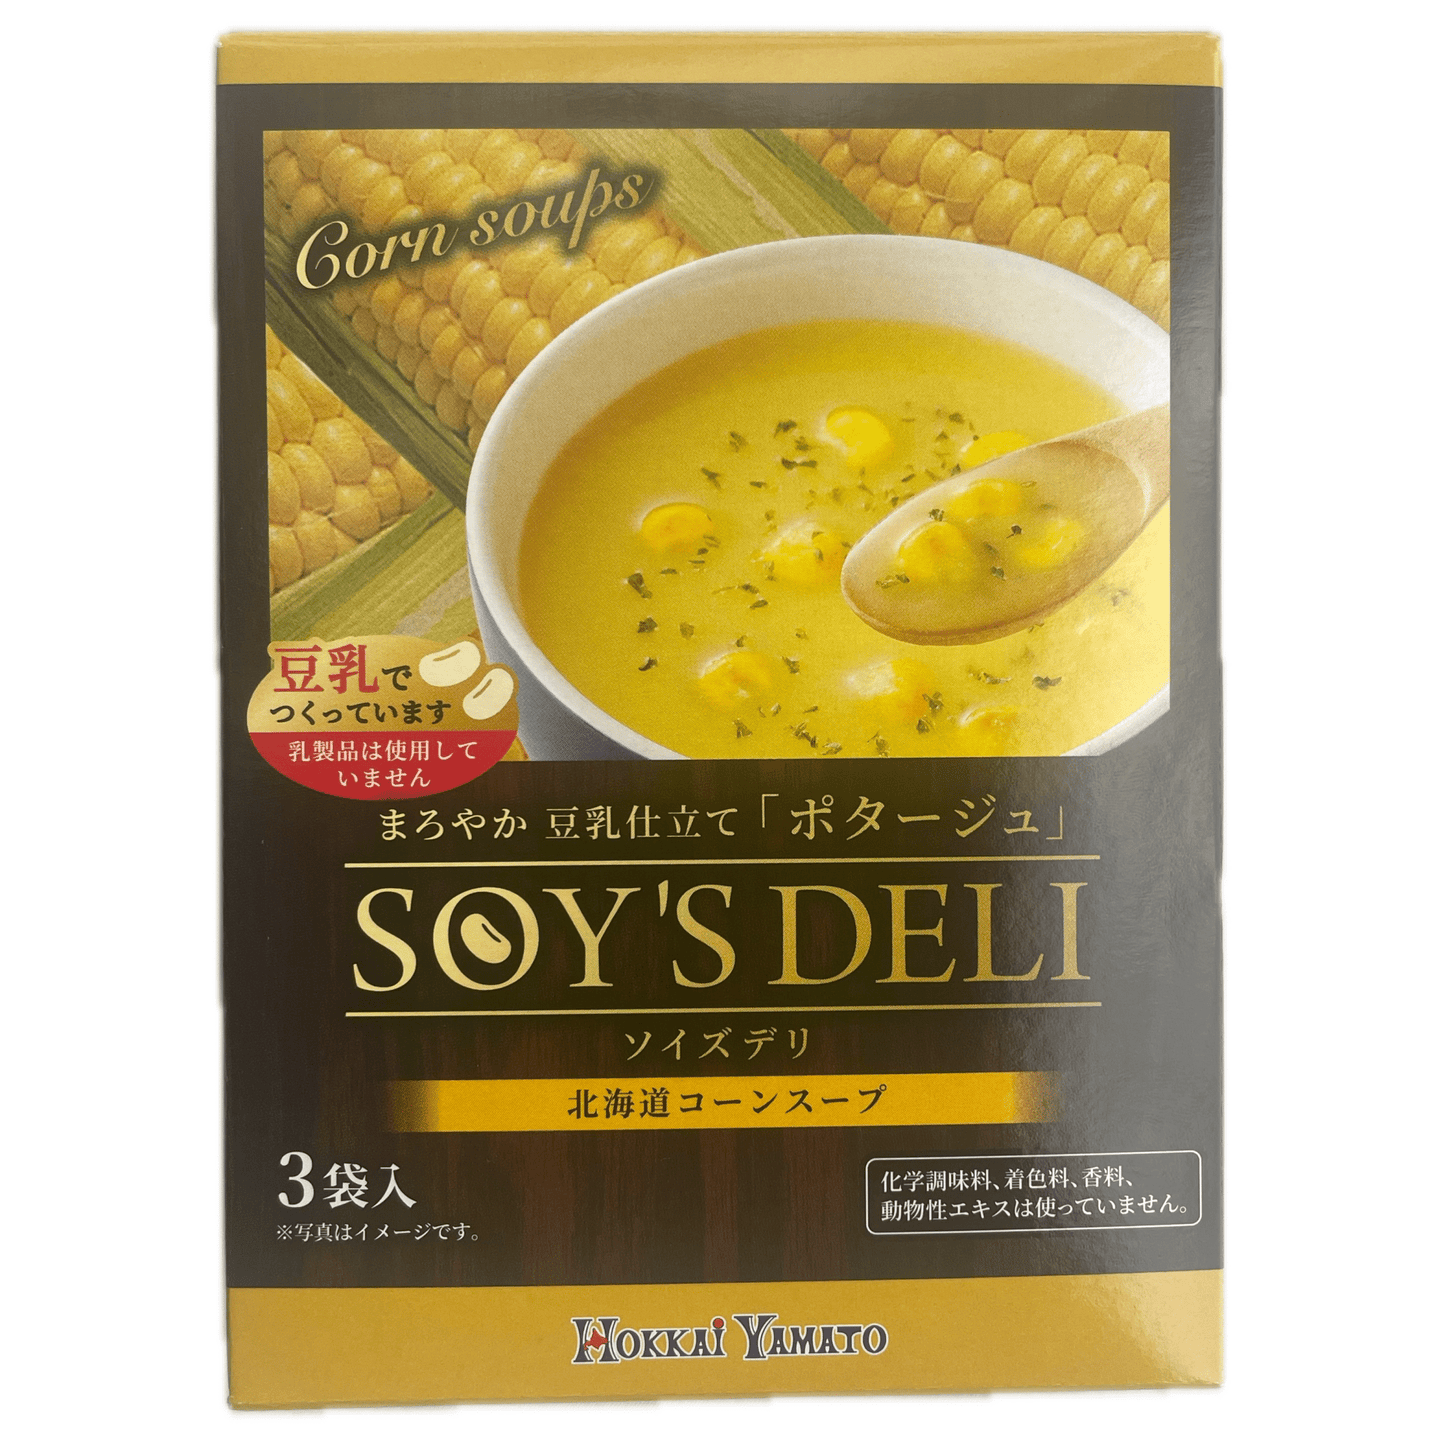 Hokkai Yamato Soy's Deli Hokkaido Corn Soup 3 servings / 北海大和 ソイズデリ 北海道コーンスープ 3袋入 - RiceWineShop